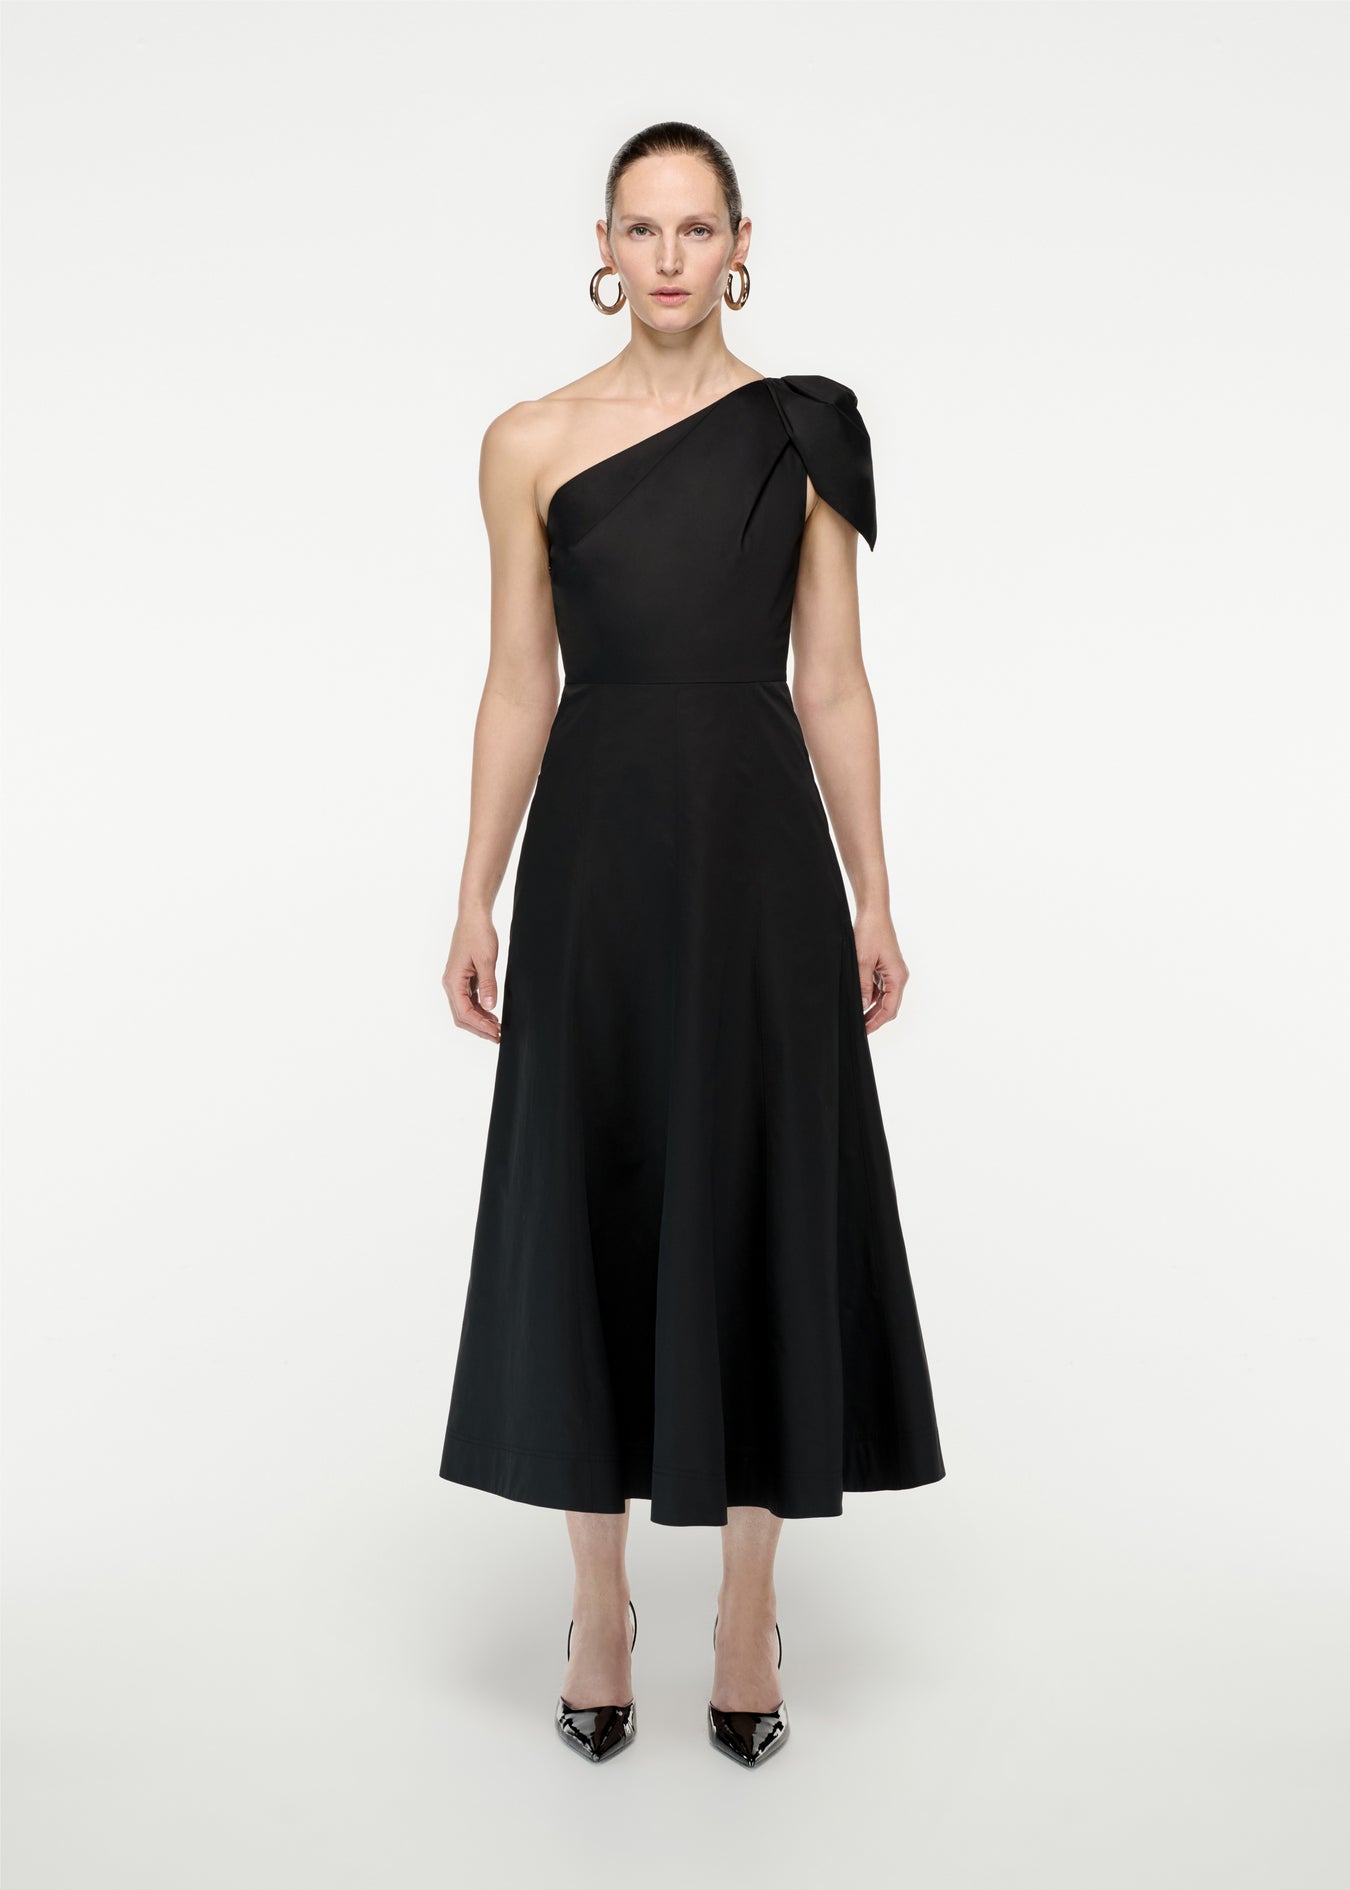 Woman wearing the Asymmetric Cotton Poplin Midi Dress in Black